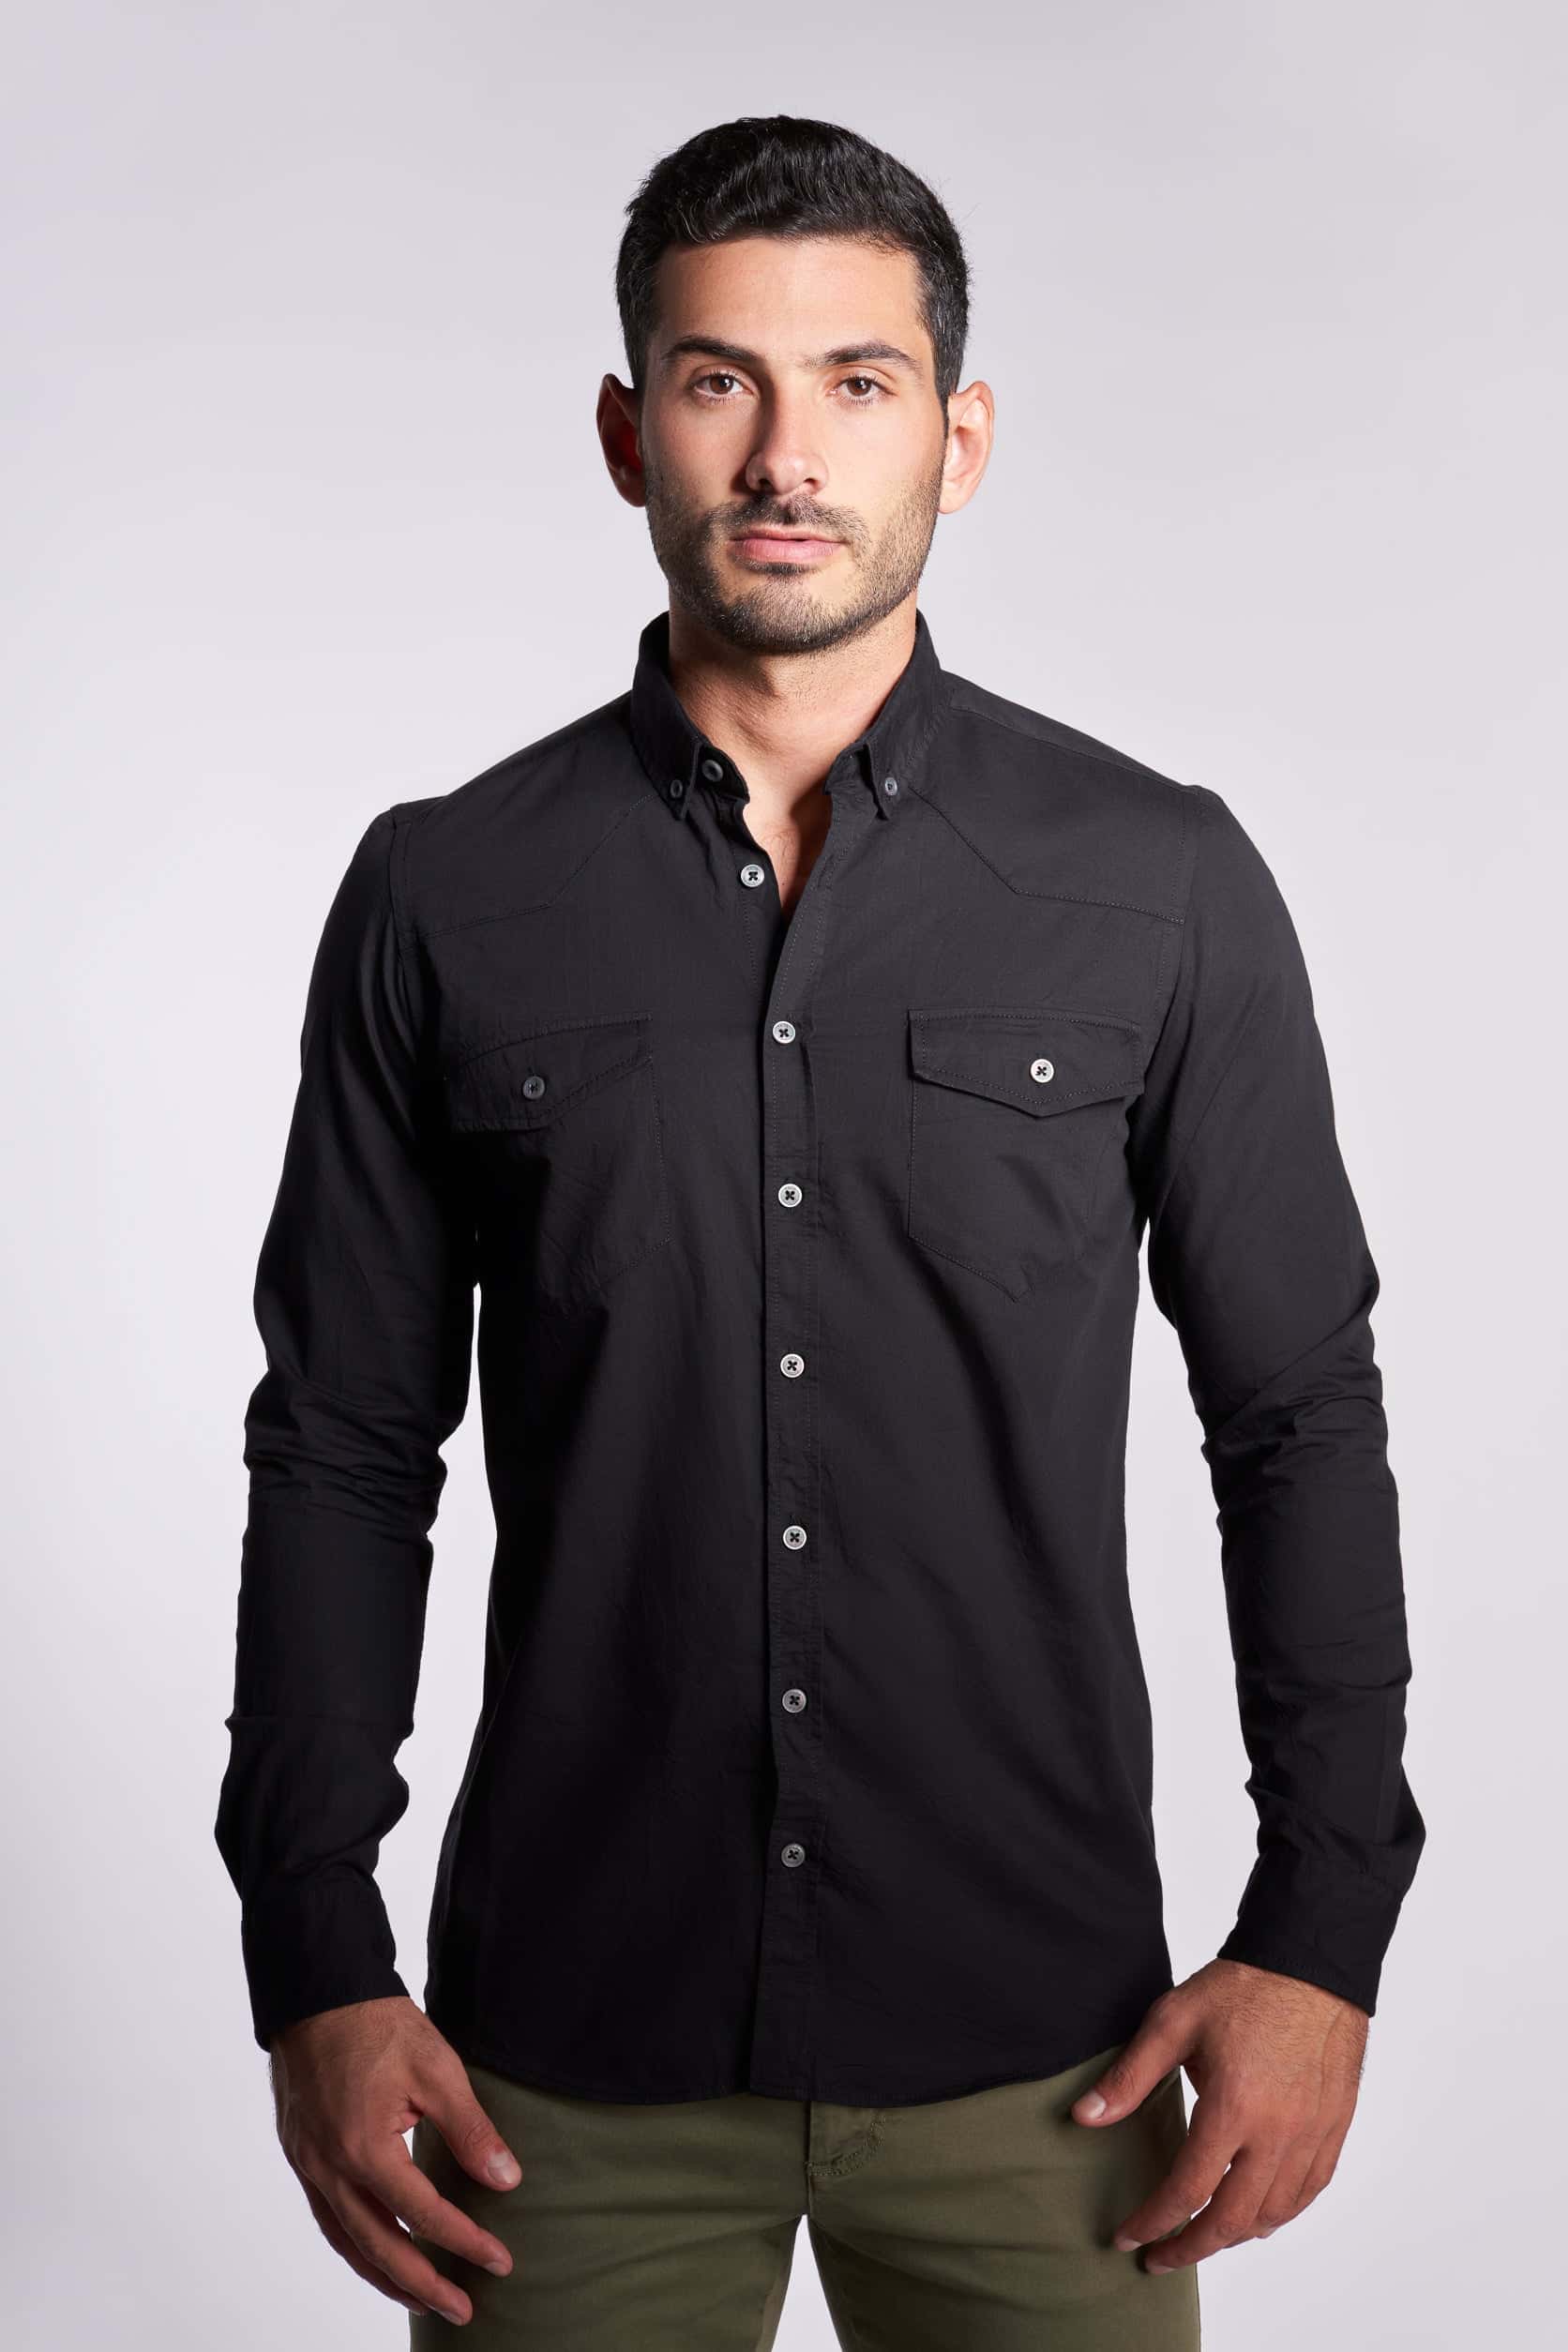 Black sleeved men's shirts